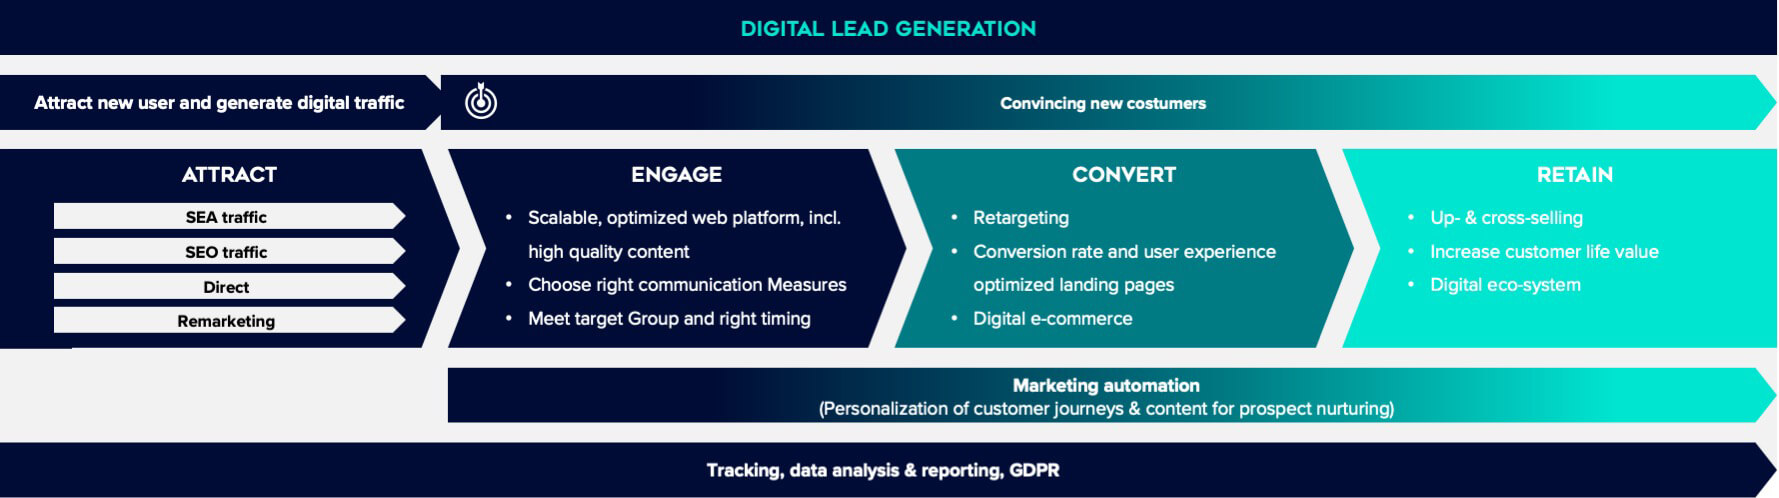 OMMAX digital lead generation approach